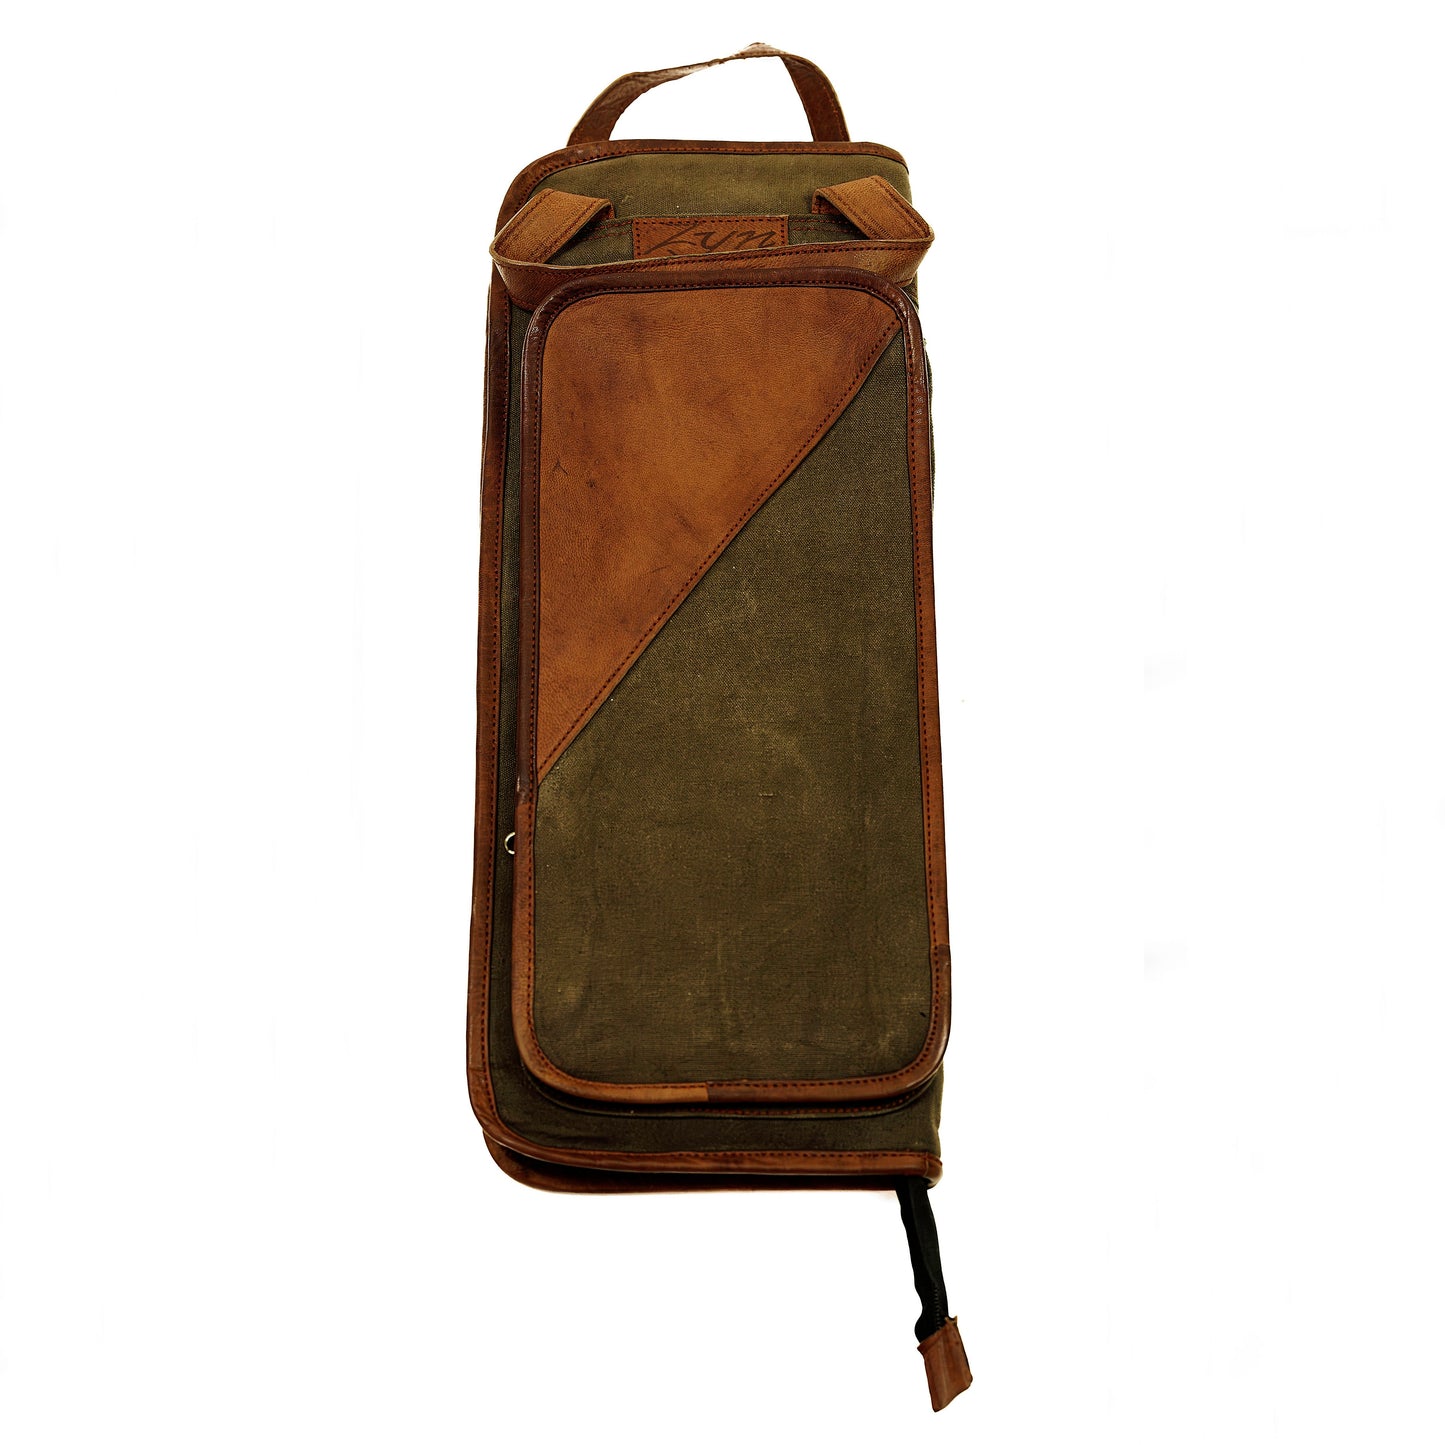 Zyn Luxury Leather Canvas Stick Bag